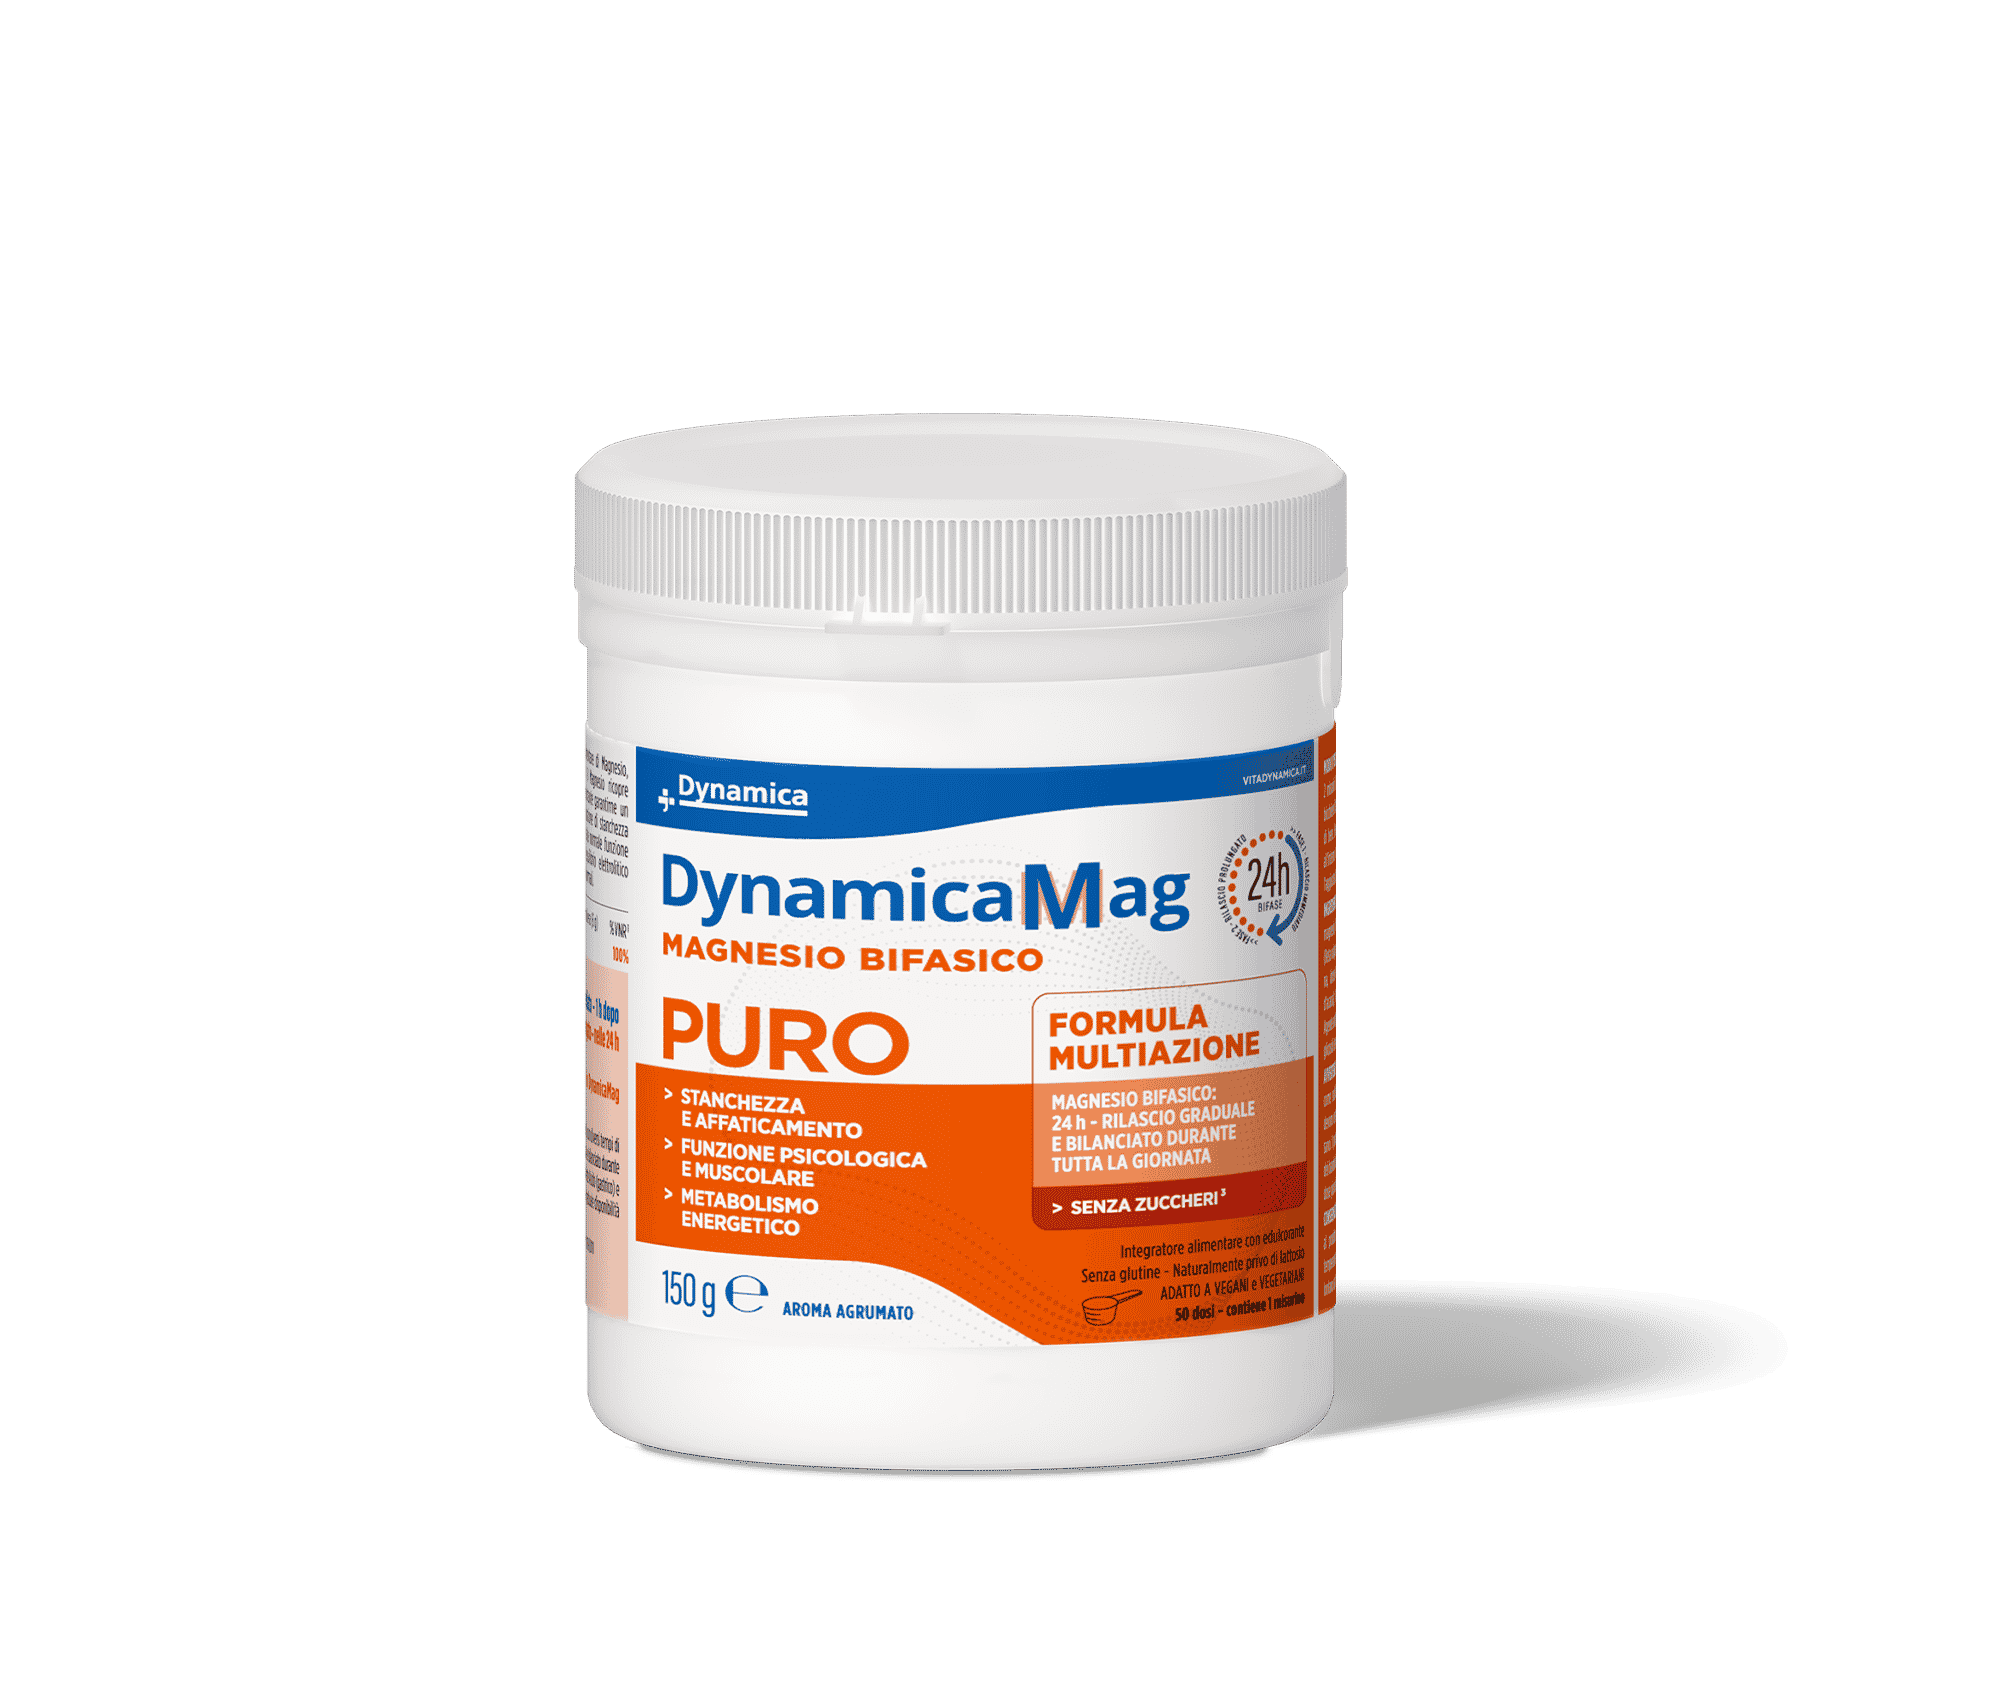 DynamicaMag Puro 150g - Pack